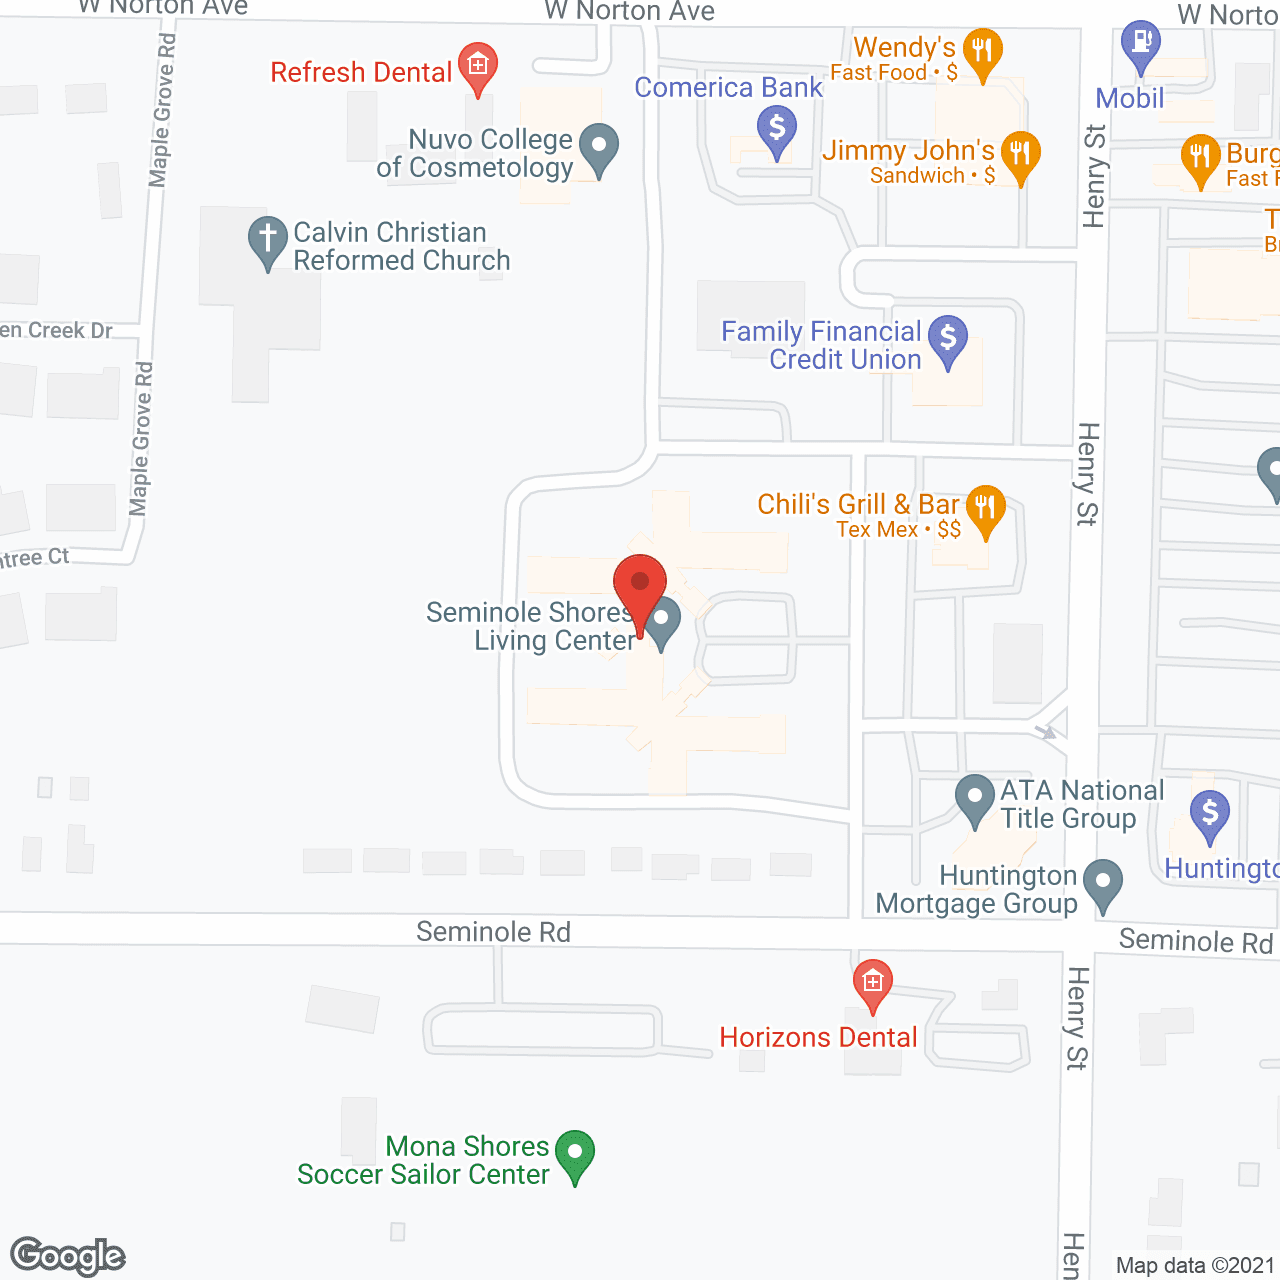 Seminole Shores Living Center in google map